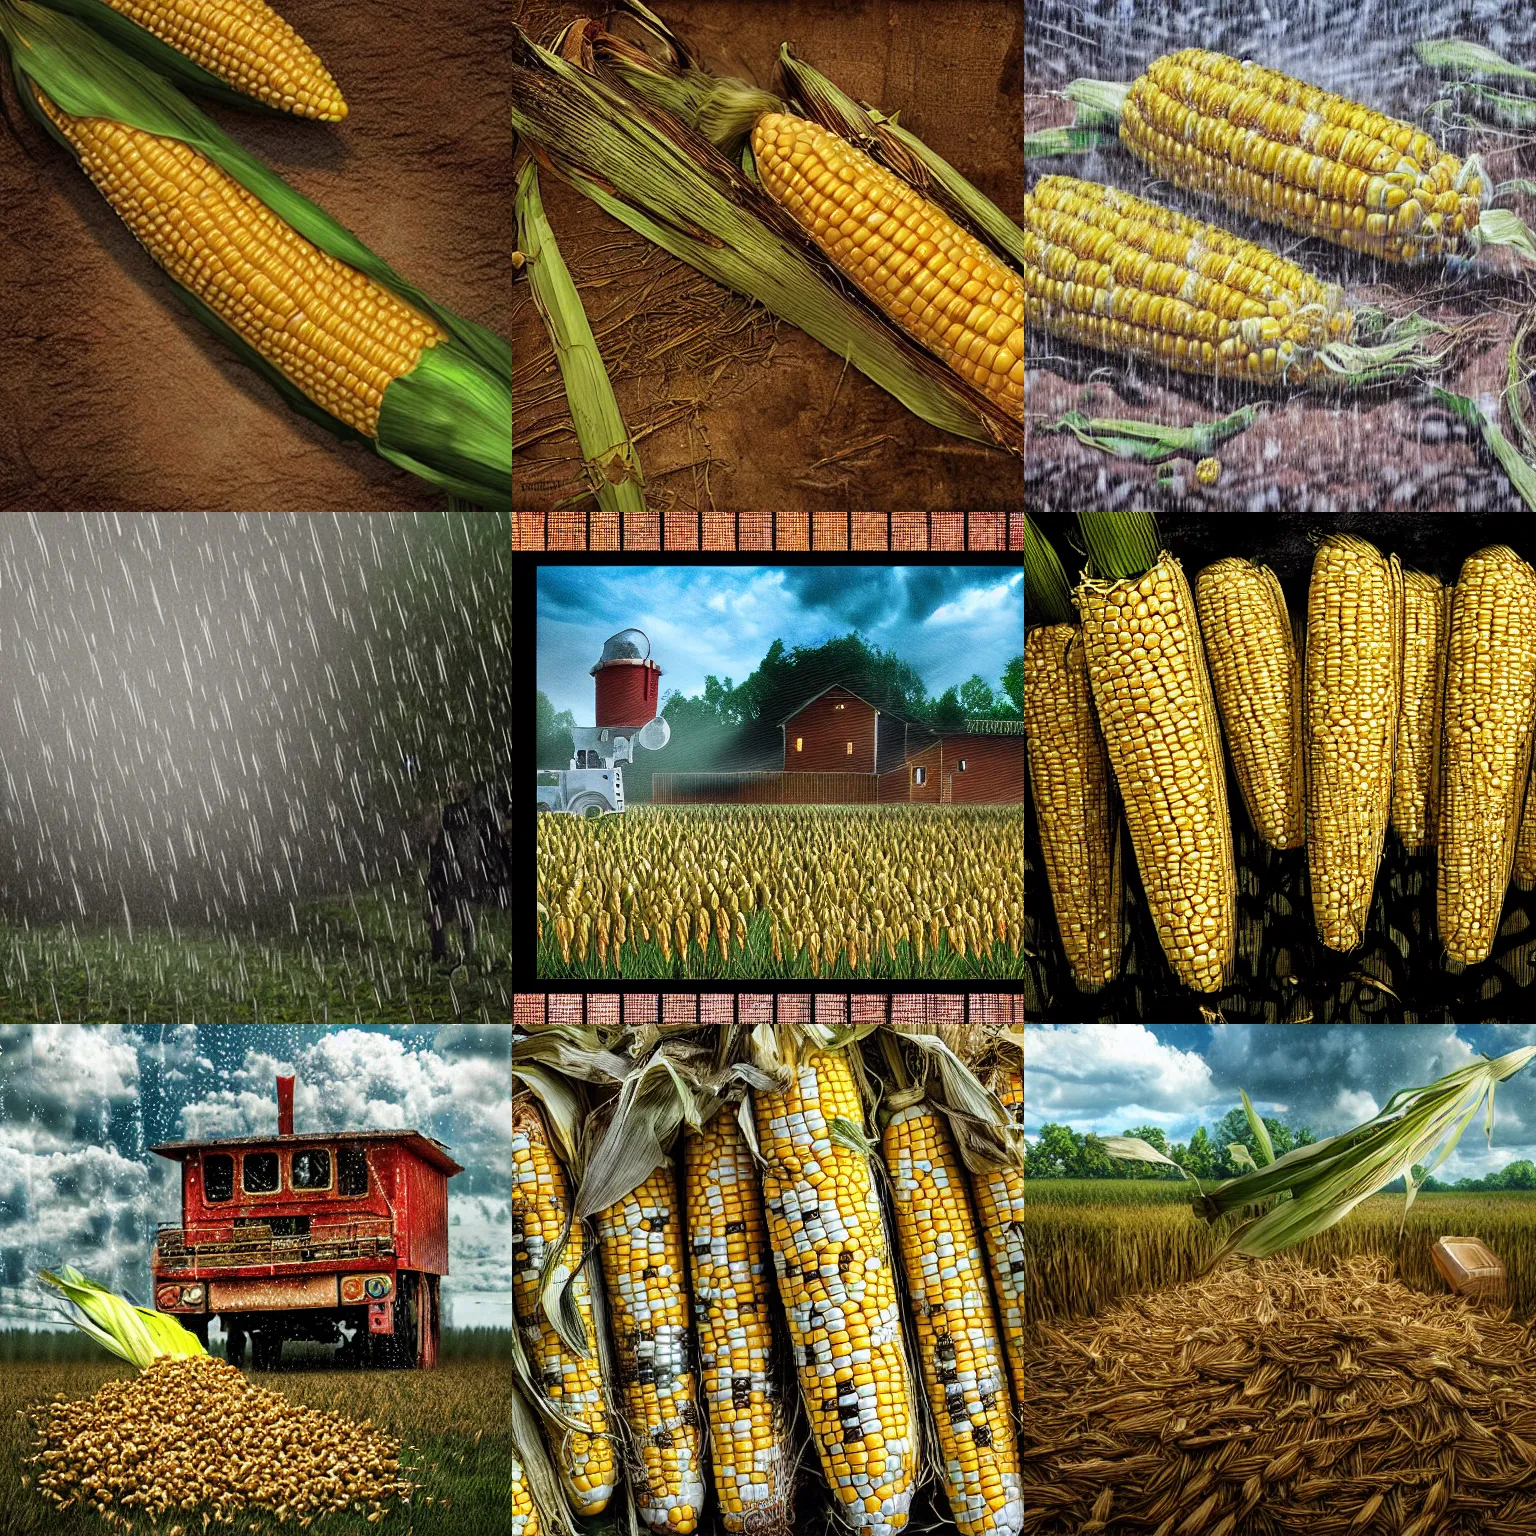 Prompt: raining corn, horror scene, detailed, photorealistic